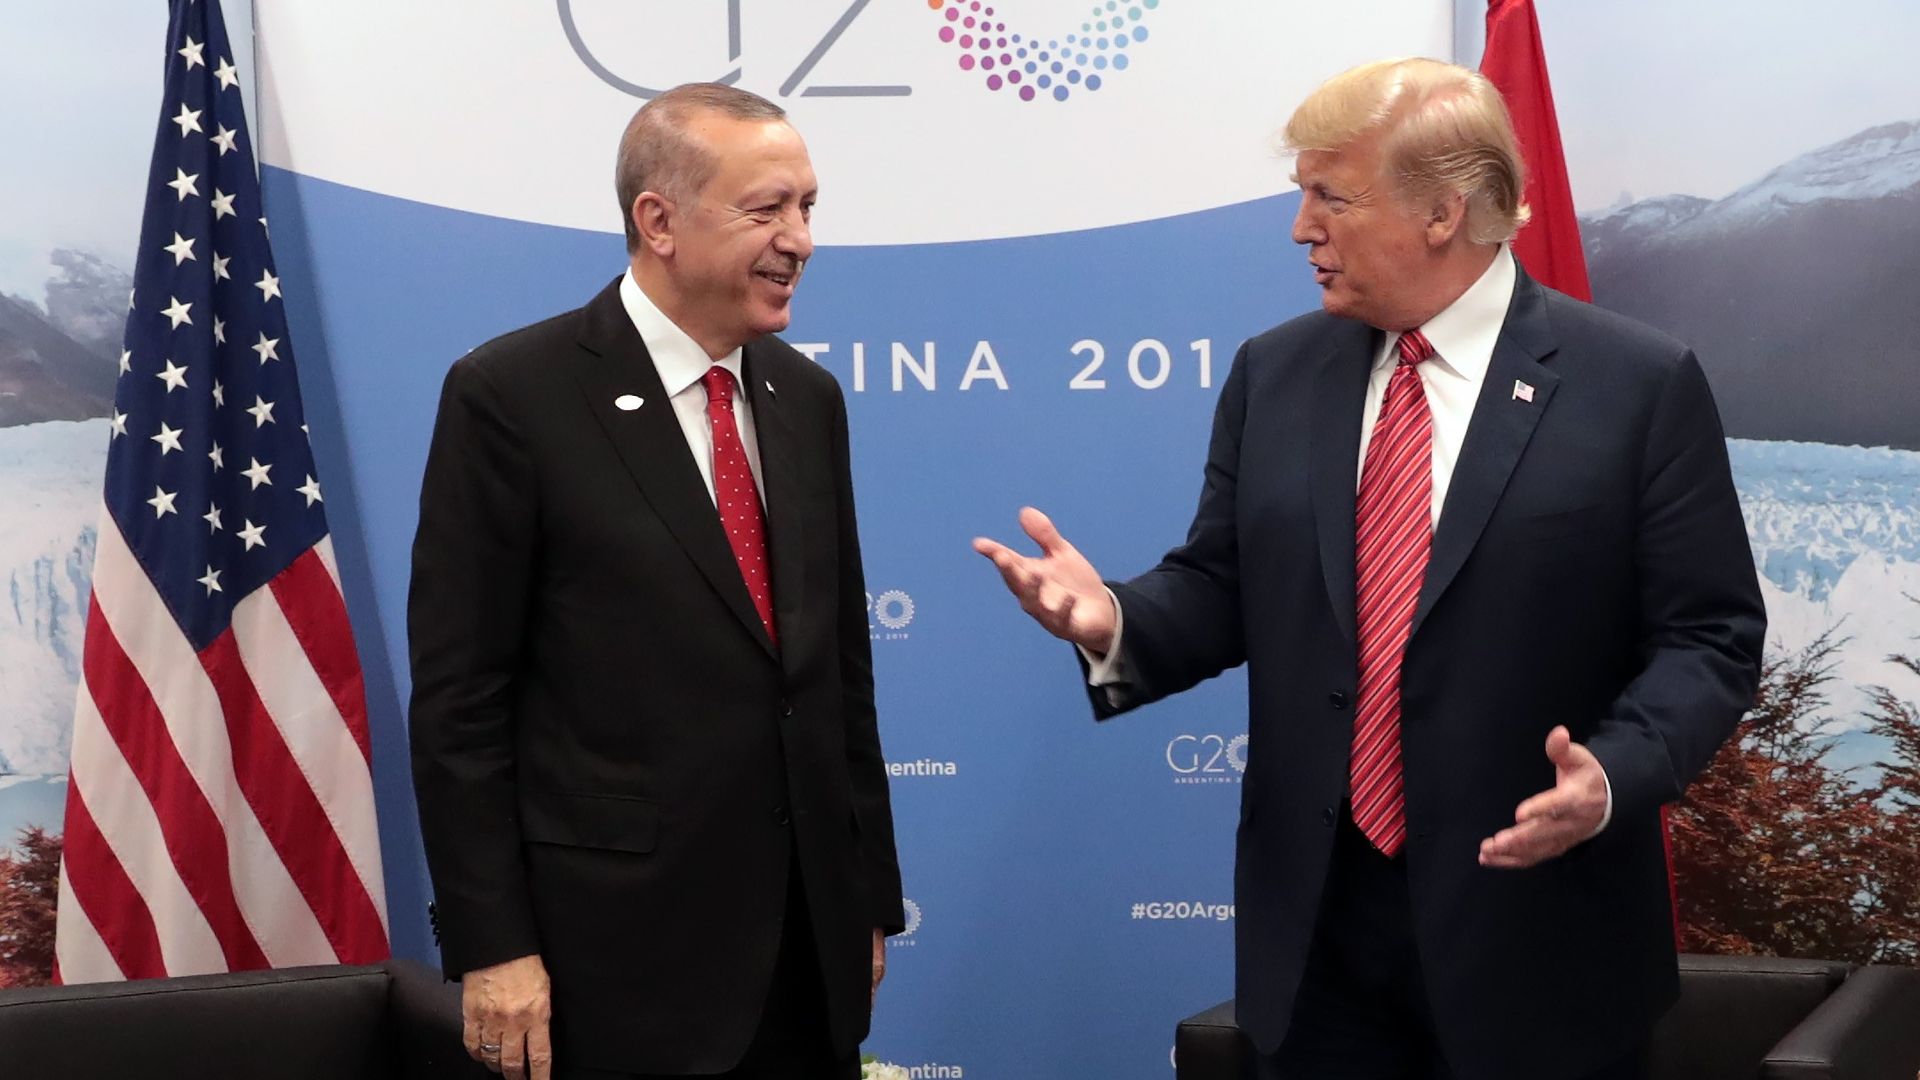 Turkish president with Donald Trump at g20 summit